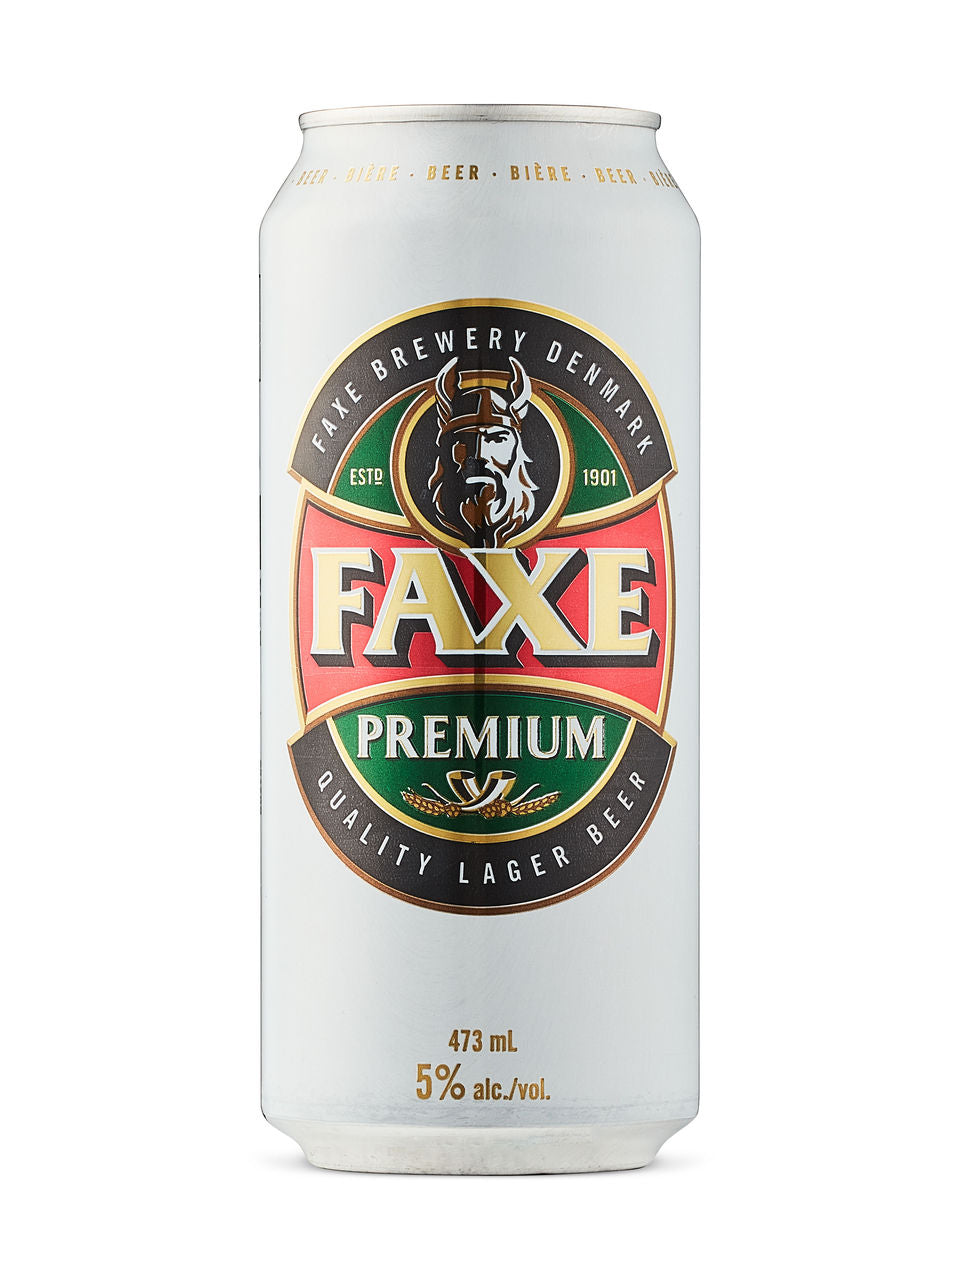 Faxe Premium 473 ml can